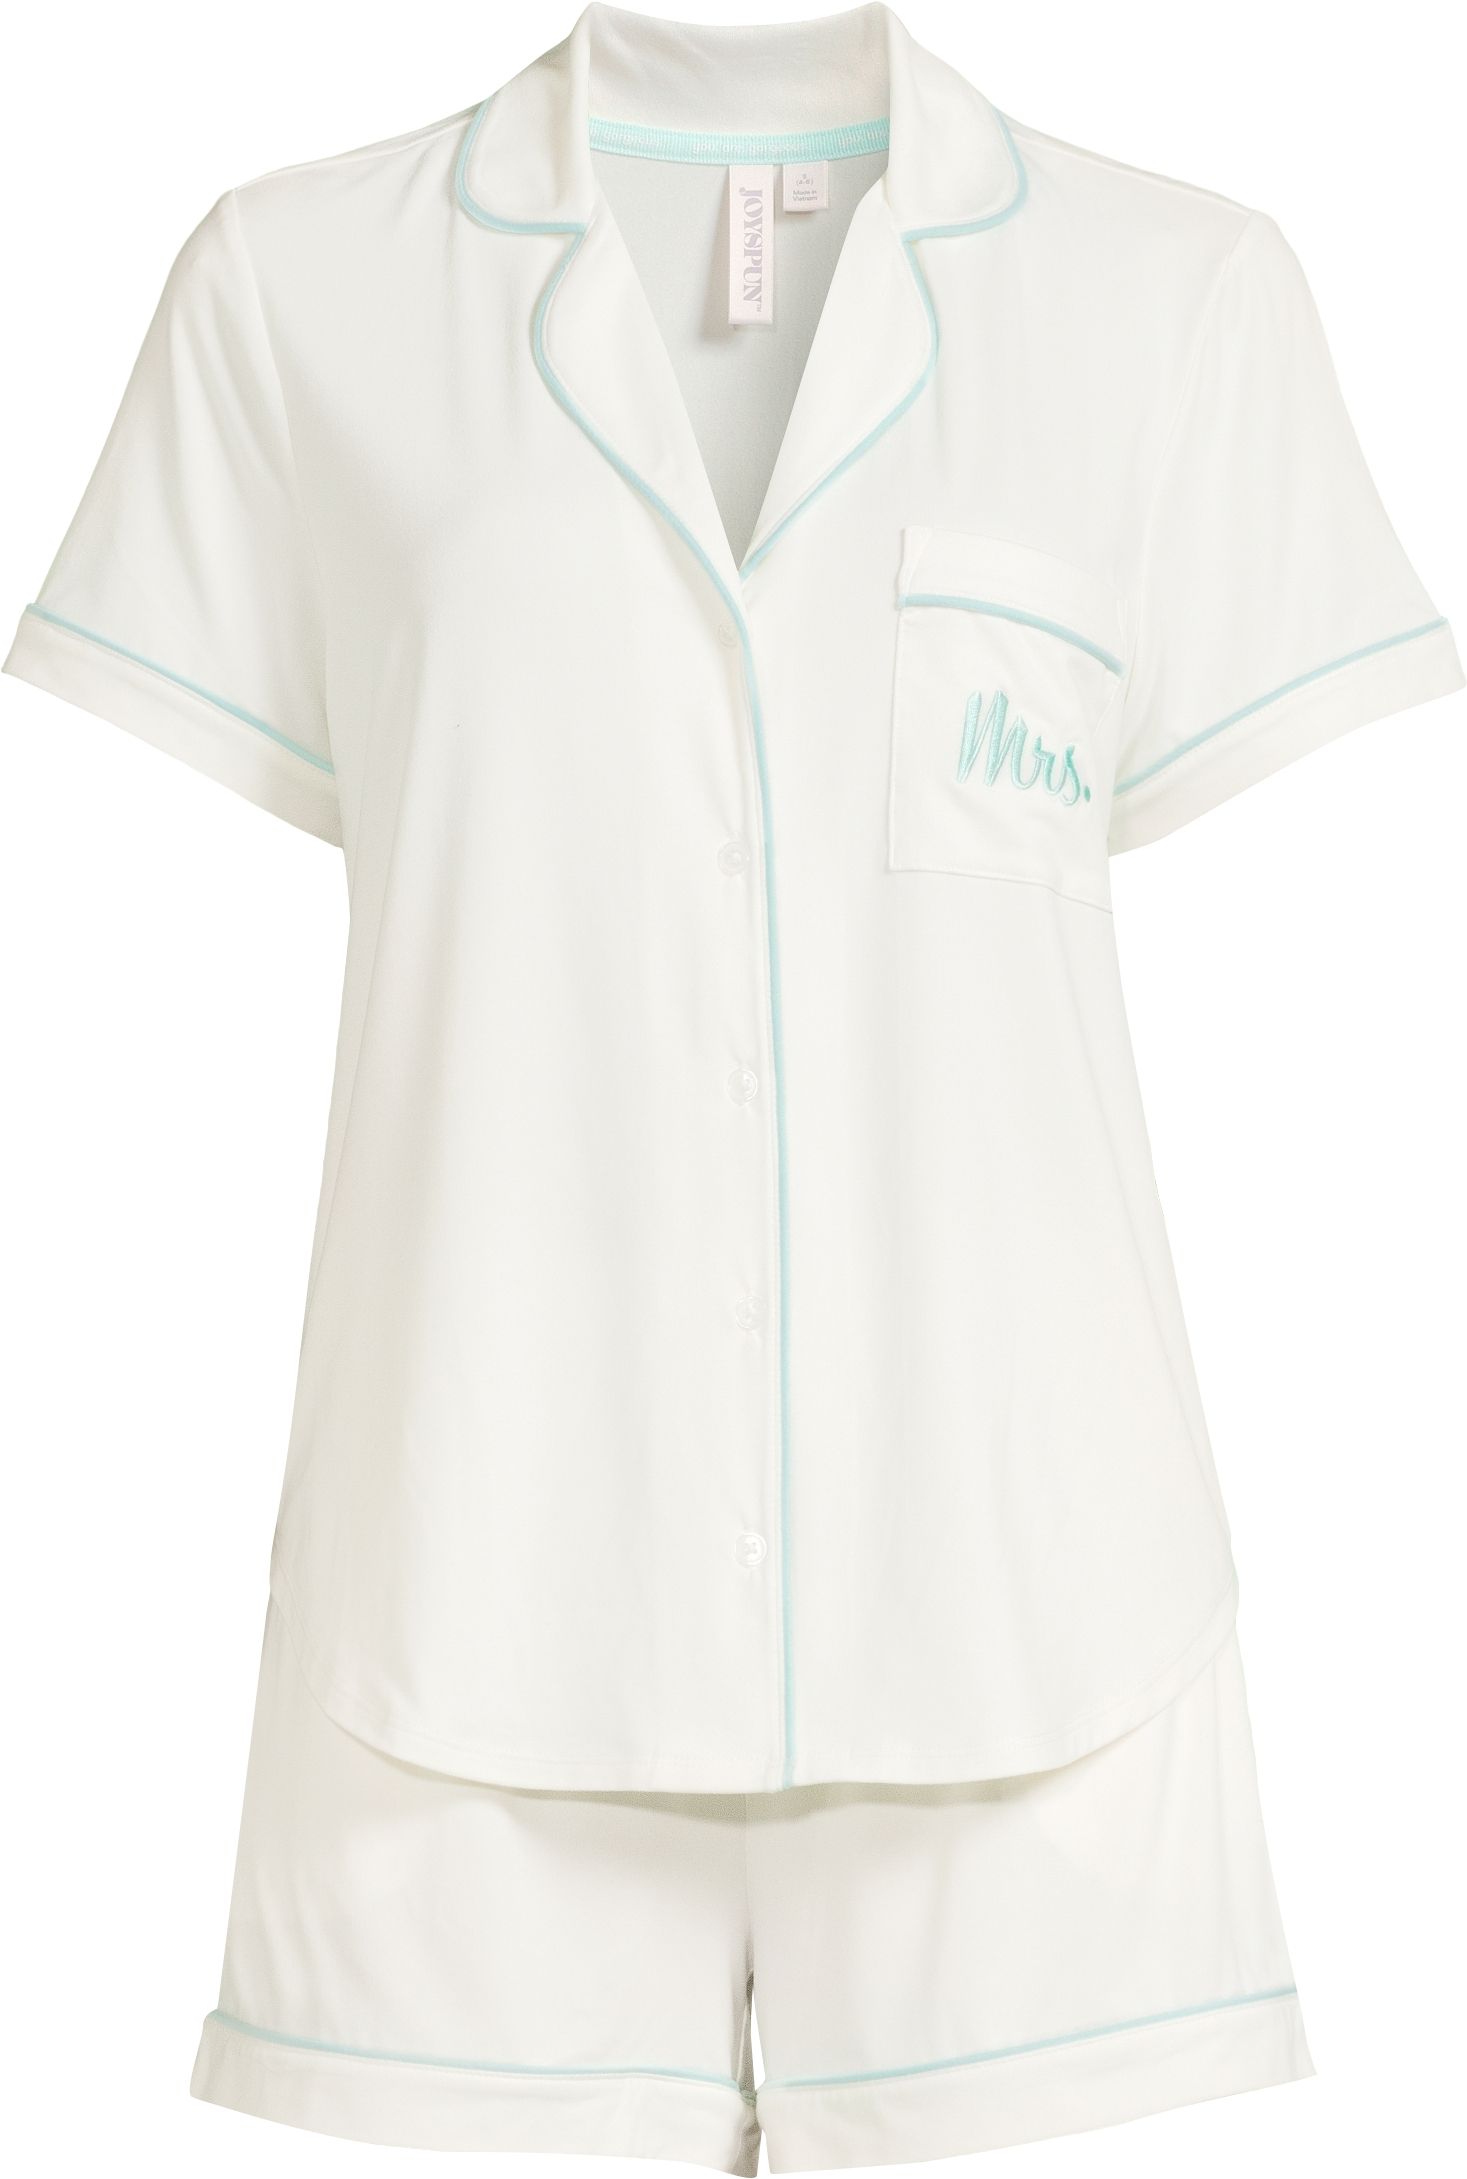 Joyspun Women's Bridal Notch Collar Top and Shorts Pajama Set, 2-Piece, Sizes XS to 3X | Walmart (US)